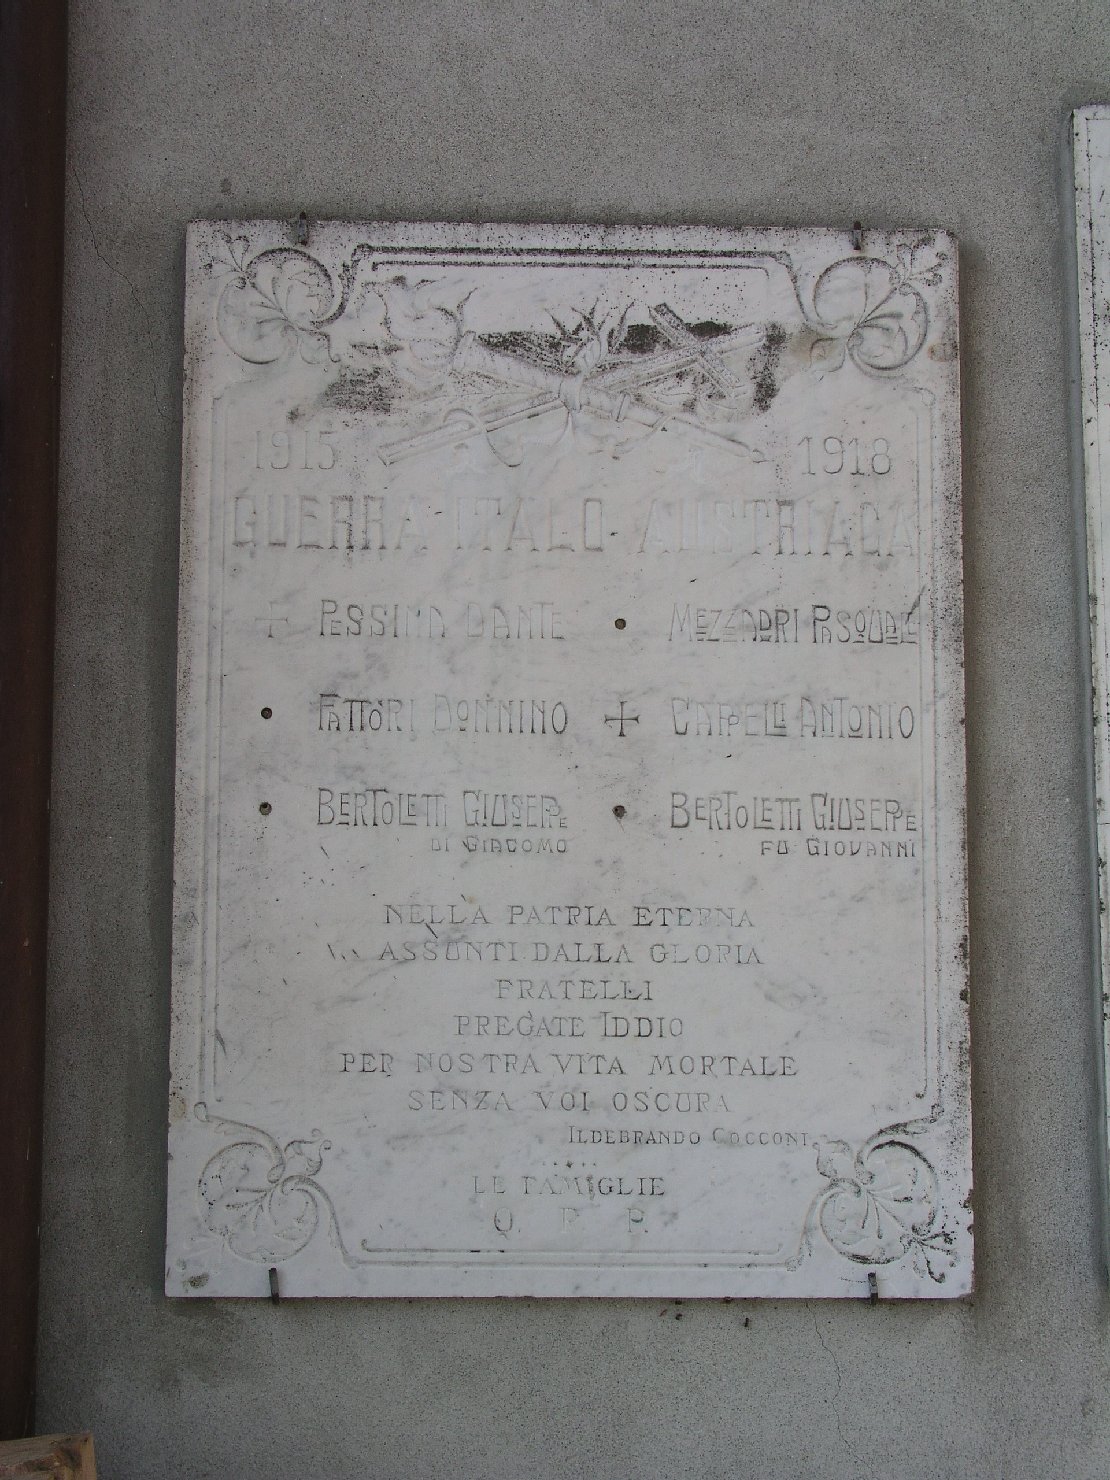 lapide commemorativa di Fontana Umberto (sec. XX)